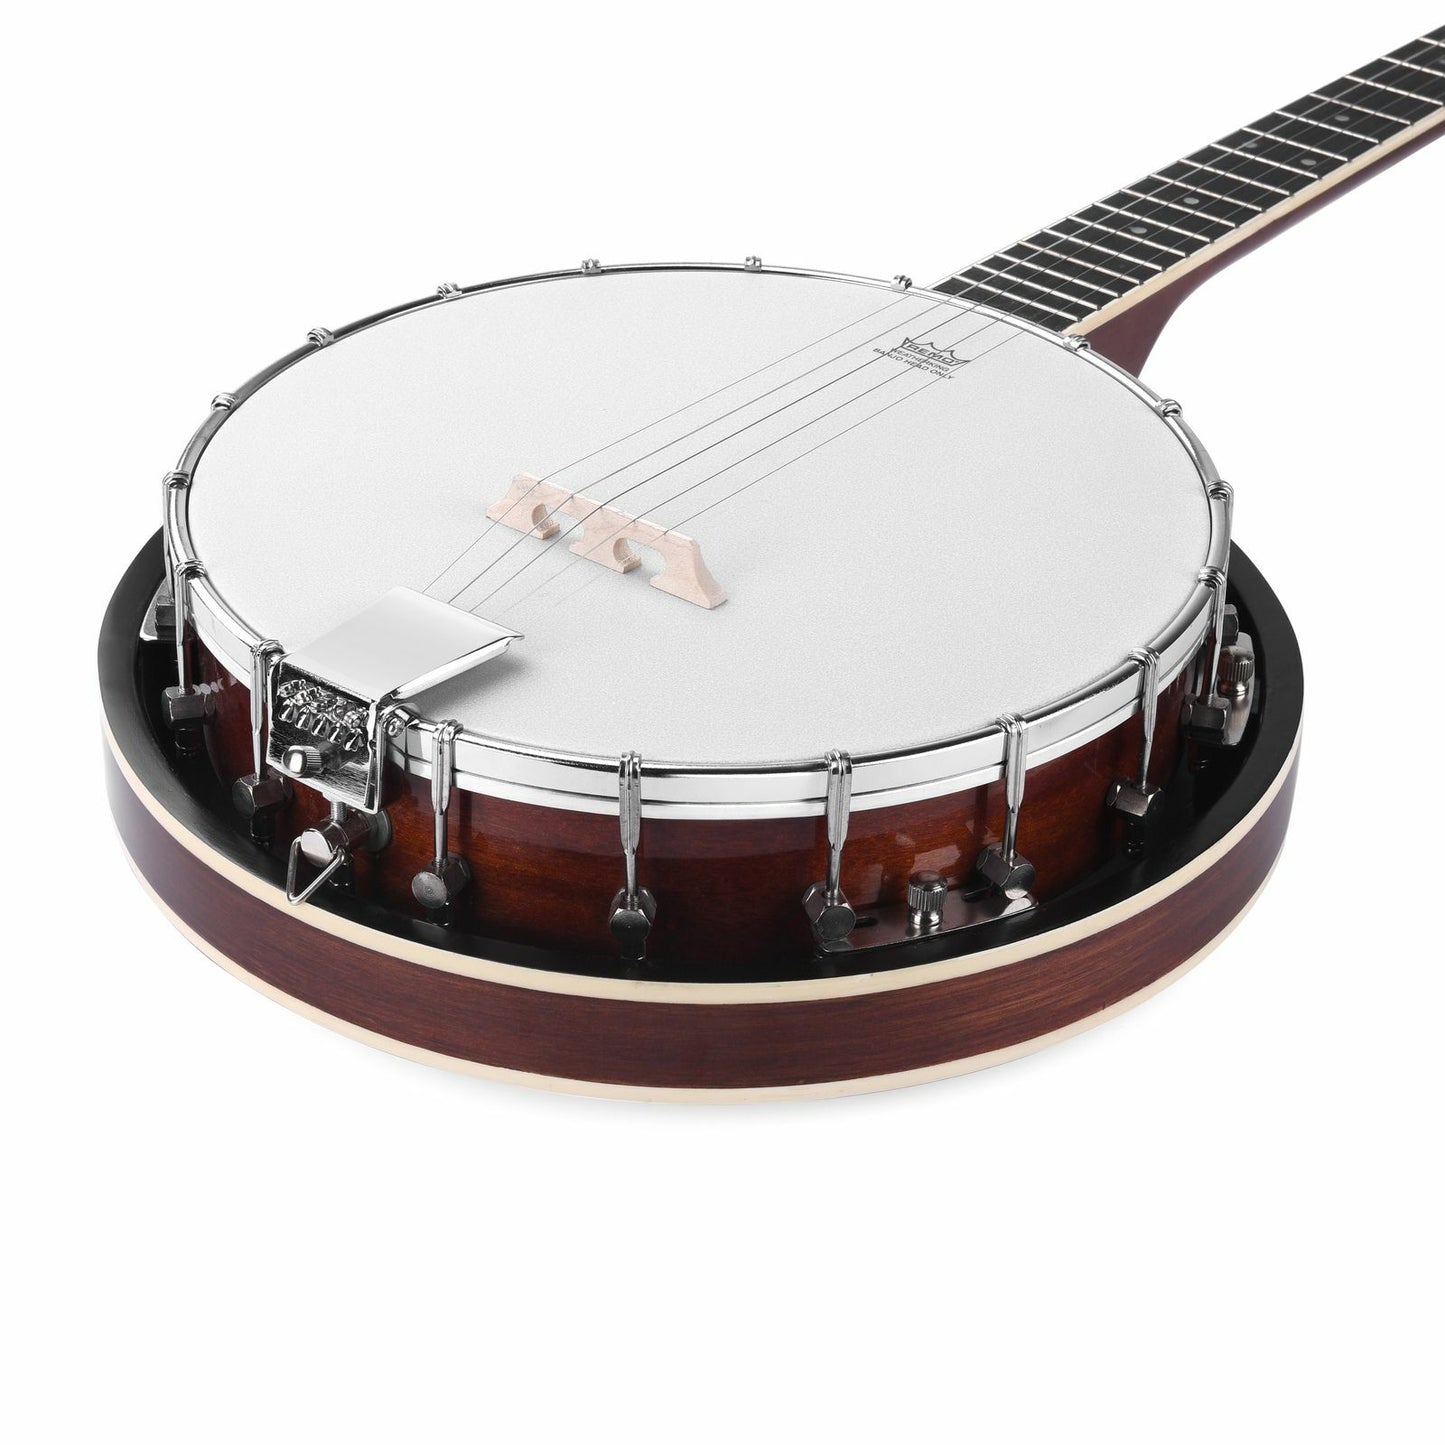 Axiom 5 String Beginners Banjo